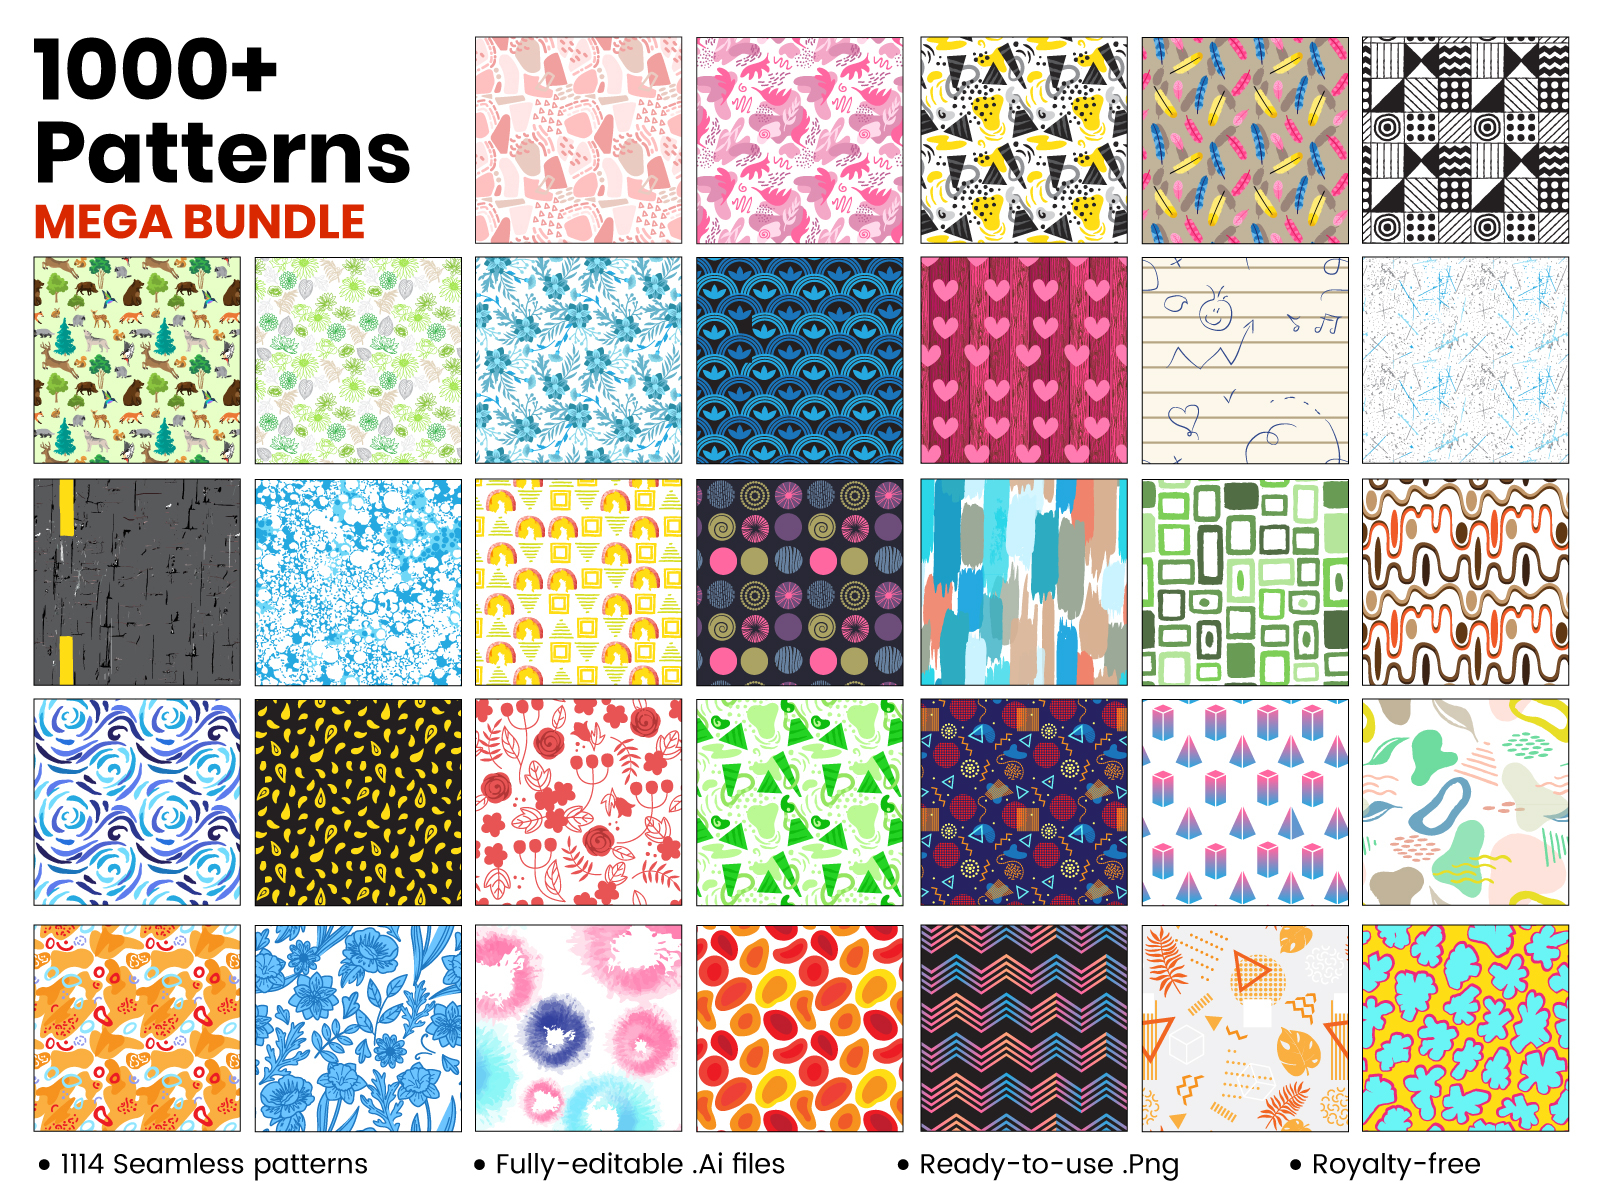 Seamless Pattern Designs Mega Bundle by GraphicMama on Dribbble